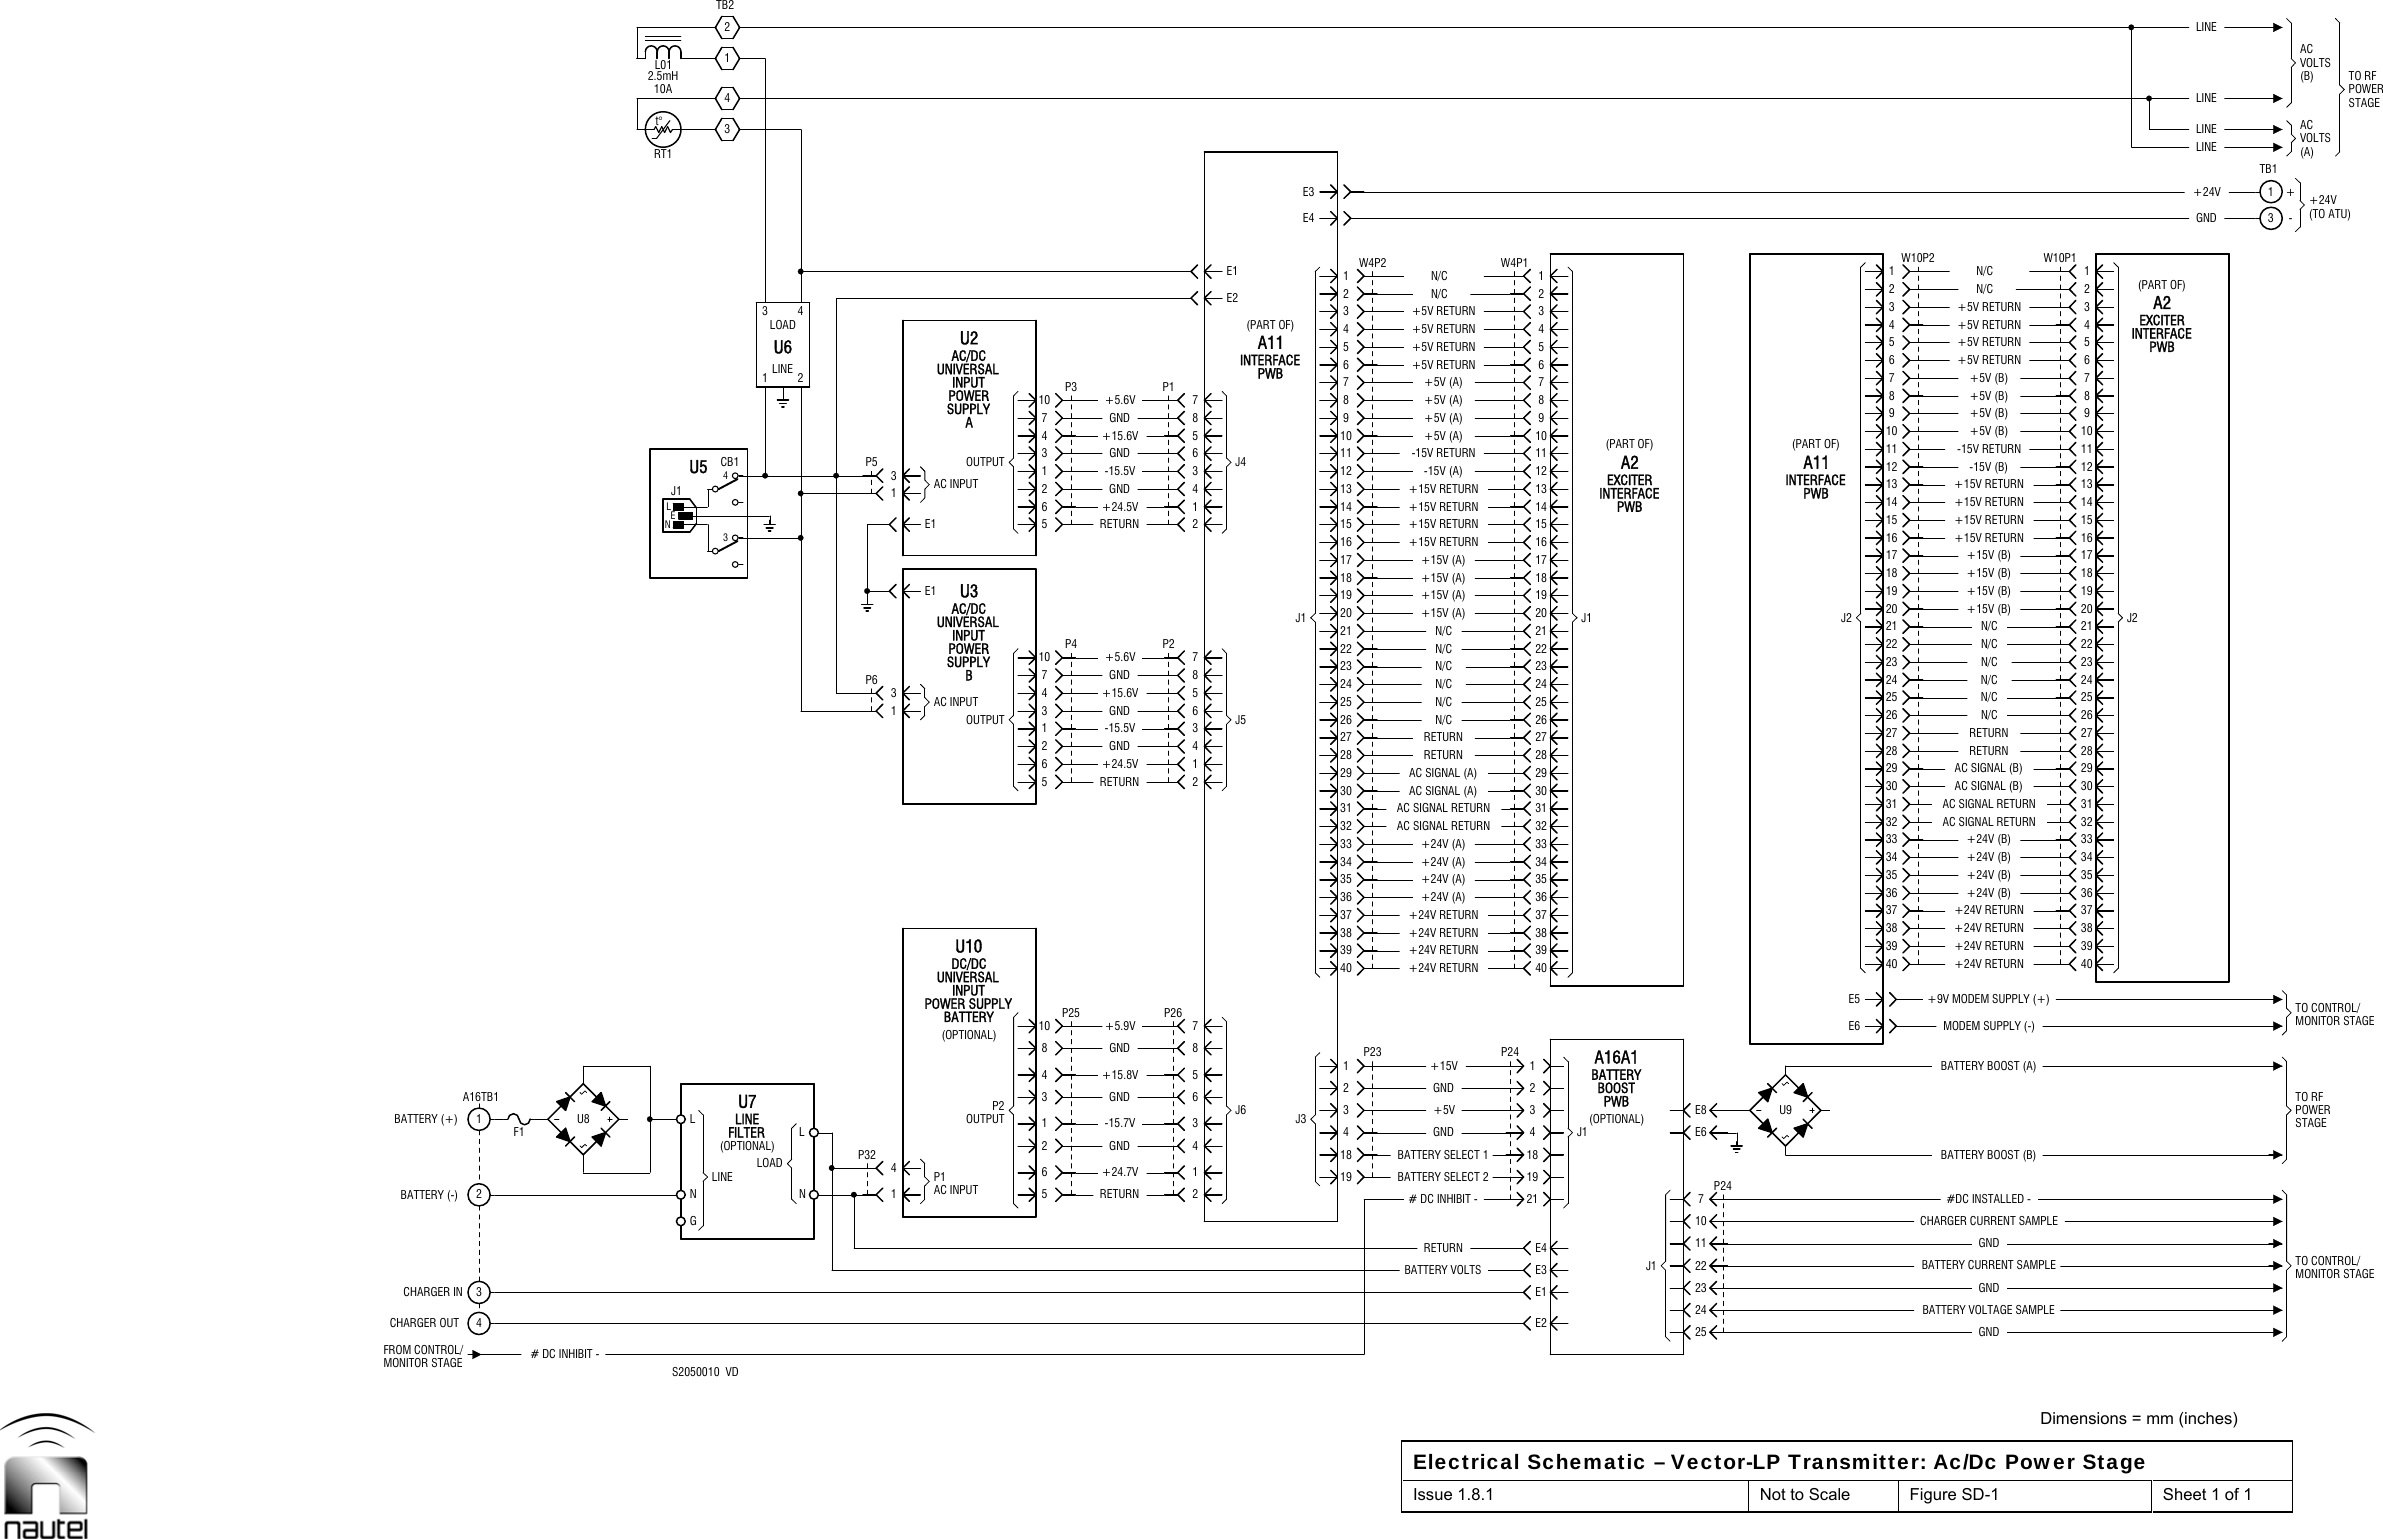  Dimensions = mm (inches) Electrical Schematic – Vector-LP Transmitter: Ac/Dc Power Stage Issue 1.8.1  Not to Scale  Figure SD-1  Sheet 1 of 1  U534TB21LINELOADP6P5BAP2P1E1E2PWBJ3E3RETURNGNDGNDRETURNN/CN/CN/CN/C-15V (A)+5V (A)+5V (A)N/CN/CJ1A2J1E6E5N/CN/CLINELINELINE+3U6P32P2P26A11J1E4+5V+15VRETURNN/CN/C+5V (A)+5V (A)J1PWB U9J2A2LINEGND -FROM CONTROL/MONITOR STAGECHARGER INBATTERY (+)F11A16TB1GU8LOADL2P1 6OUTPUT 1438(OPTIONAL)INPUTPOWER SUPPLYU1056OUTPUT 147INPUT P4POWERE1 U36OUTPUT 13SUPPLY 7INPUT P3UNIVERSALU2+24.7V 1-15.7V 3+15.8V 5GND 6GND+5.9V8RETURN+24.5V21J5-15.5V 3+15.6VGND58+24.5V 1J4-15.5VGND36GND 81942P23393736343231292726242221191716141211976421E31942P24393736343231292726242221191716141211976421242210P24E63940373435322930272425221920171415A11 1291074523940373435322930N/C27N/CN/C2425N/CN/C221920171415129107452STAGETO RF+24V 1(A)AC(B)STAGETO RFCHARGER OUT 4BATTERY (-)32 NLNEJ110At°RT1NU74AC INPUT 52DC/DCBATTERYUNIVERSALP2510AC/DCAC INPUTSUPPLYUNIVERSAL2310E1AC INPUT524AC/DCPOWER 10RETURNGND24J67GNDGND+5.6V467GNDRETURN+15.6V245+5.6V 7183140383533302825232018151310W4P2853E2E1E421183140383533302825232018151310W4P18532523117E83631383326212823PWB1611181361W10P283GNDGNDGND36313833N/CJ226212823161118136183W10P1ACTB13POWERL2.5mHL01# DC INHIBIT -LINE 4FILTERLINE33412BATTERY VOLTSBATTERY SELECT 2(OPTIONAL)BATTERYBOOST+24V RETURN+24V (A)+24V RETURN+24V (A)AC SIGNAL RETURNAC SIGNAL RETURNAC SIGNAL (A)+15V (A)+15V (A)+15V RETURNPWB+15V RETURN-15V RETURN+5V RETURN(PART OF) +5V RETURNBATTERY VOLTAGE SAMPLETO CONTROL/BATTERY CURRENT SAMPLE MONITOR STAGECHARGER CURRENT SAMPLEMODEM SUPPLY (-)TO CONTROL/+9V MODEM SUPPLY (+)+24V RETURN+24V RETURN+24V RETURN+24V (B)+24V (B)+24V (B)AC SIGNAL RETURNAC SIGNAL RETURNAC SIGNAL (B)AC SIGNAL (B)RETURN+15V (B)+15V (B)+15V (B)+15V RETURN+15V RETURN+15V RETURN-15V RETURN-15V (B)+5V (B)+5V (B)+5V (B)+5V RETURN+5V RETURN INTERFACEEXCITER+5V RETURN(PART OF)+24VVOLTSVOLTSS2050010  VD1(OPTIONAL)11CB13# DC INHIBIT -BATTERY SELECT 1+24V RETURNA16A1+24V (A)+24V (A)+24V RETURNAC SIGNAL (A)+15V (A)+15V (A)INTERFACE(PART OF)EXCITER+15V RETURN+15V RETURNINTERFACE+5V RETURN+5V RETURN#DC INSTALLED -BATTERY BOOST (B)POWERBATTERY BOOST (A)MONITOR STAGE+24V RETURN+24V (B)RETURN(PART OF)INTERFACE+15V (B)+15V RETURN+5V (B)PWB+5V RETURN(TO ATU)